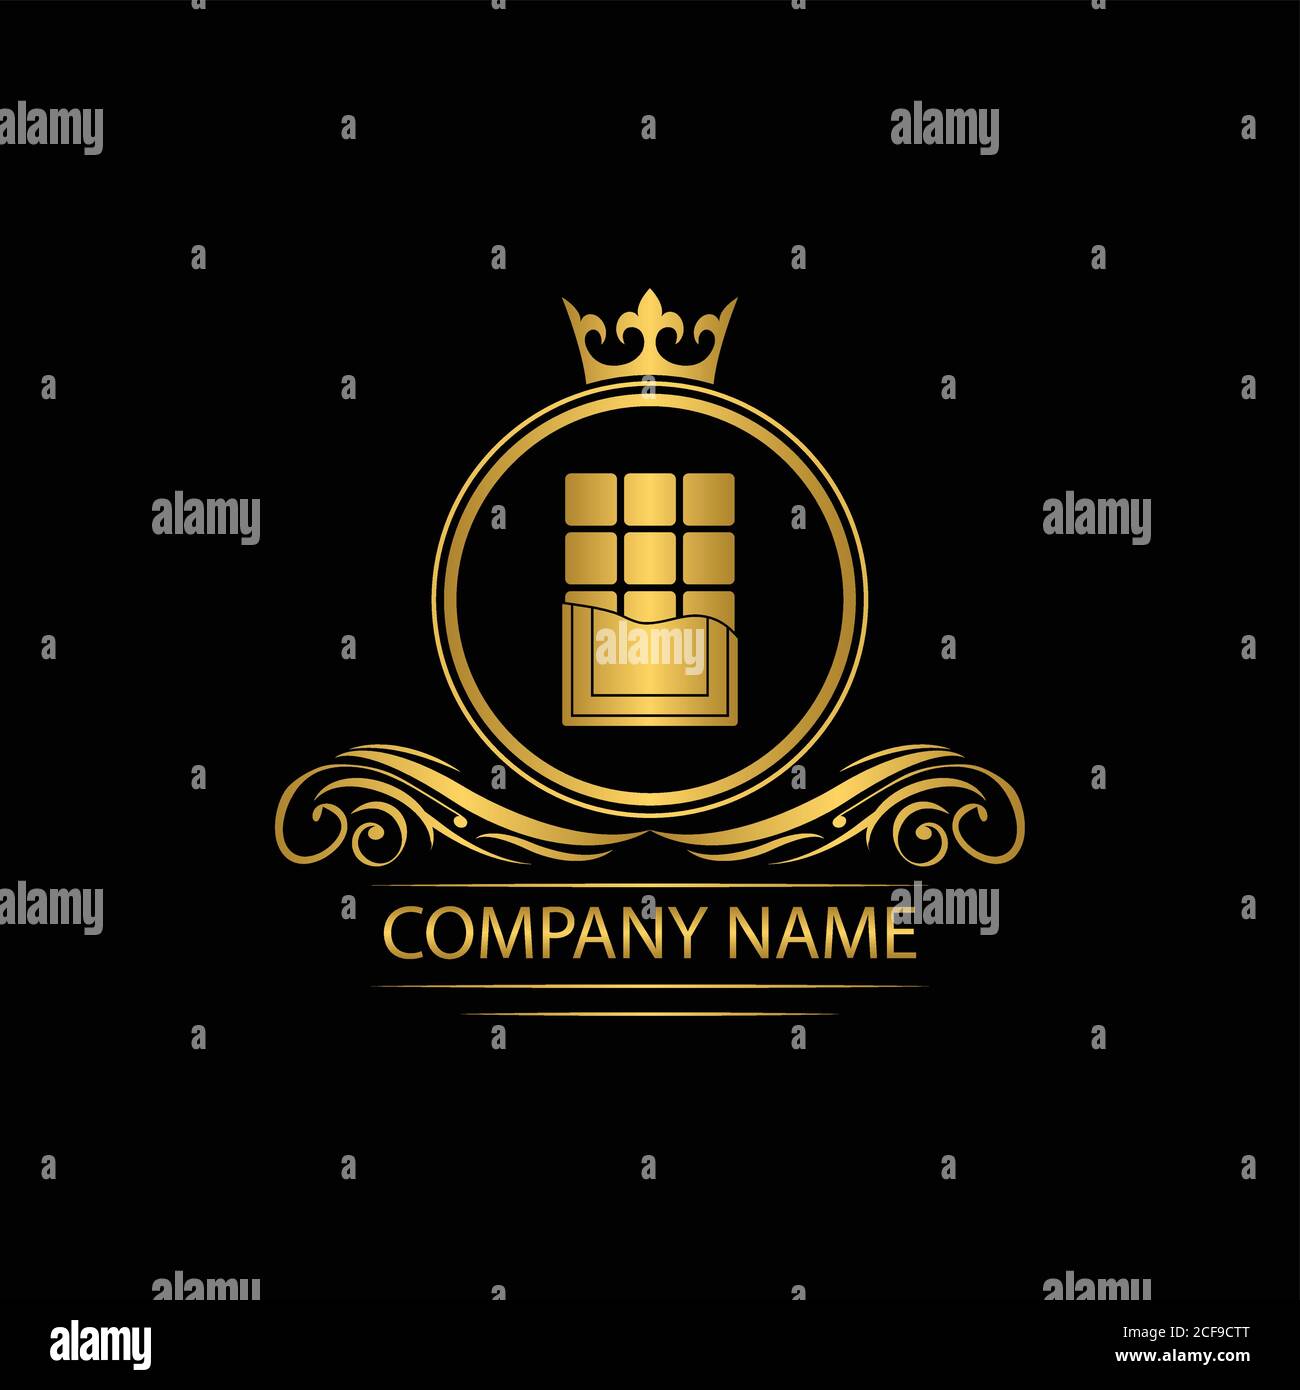 chokolate logo template luxury royal vector company decorative emblem with crown Stock Vector